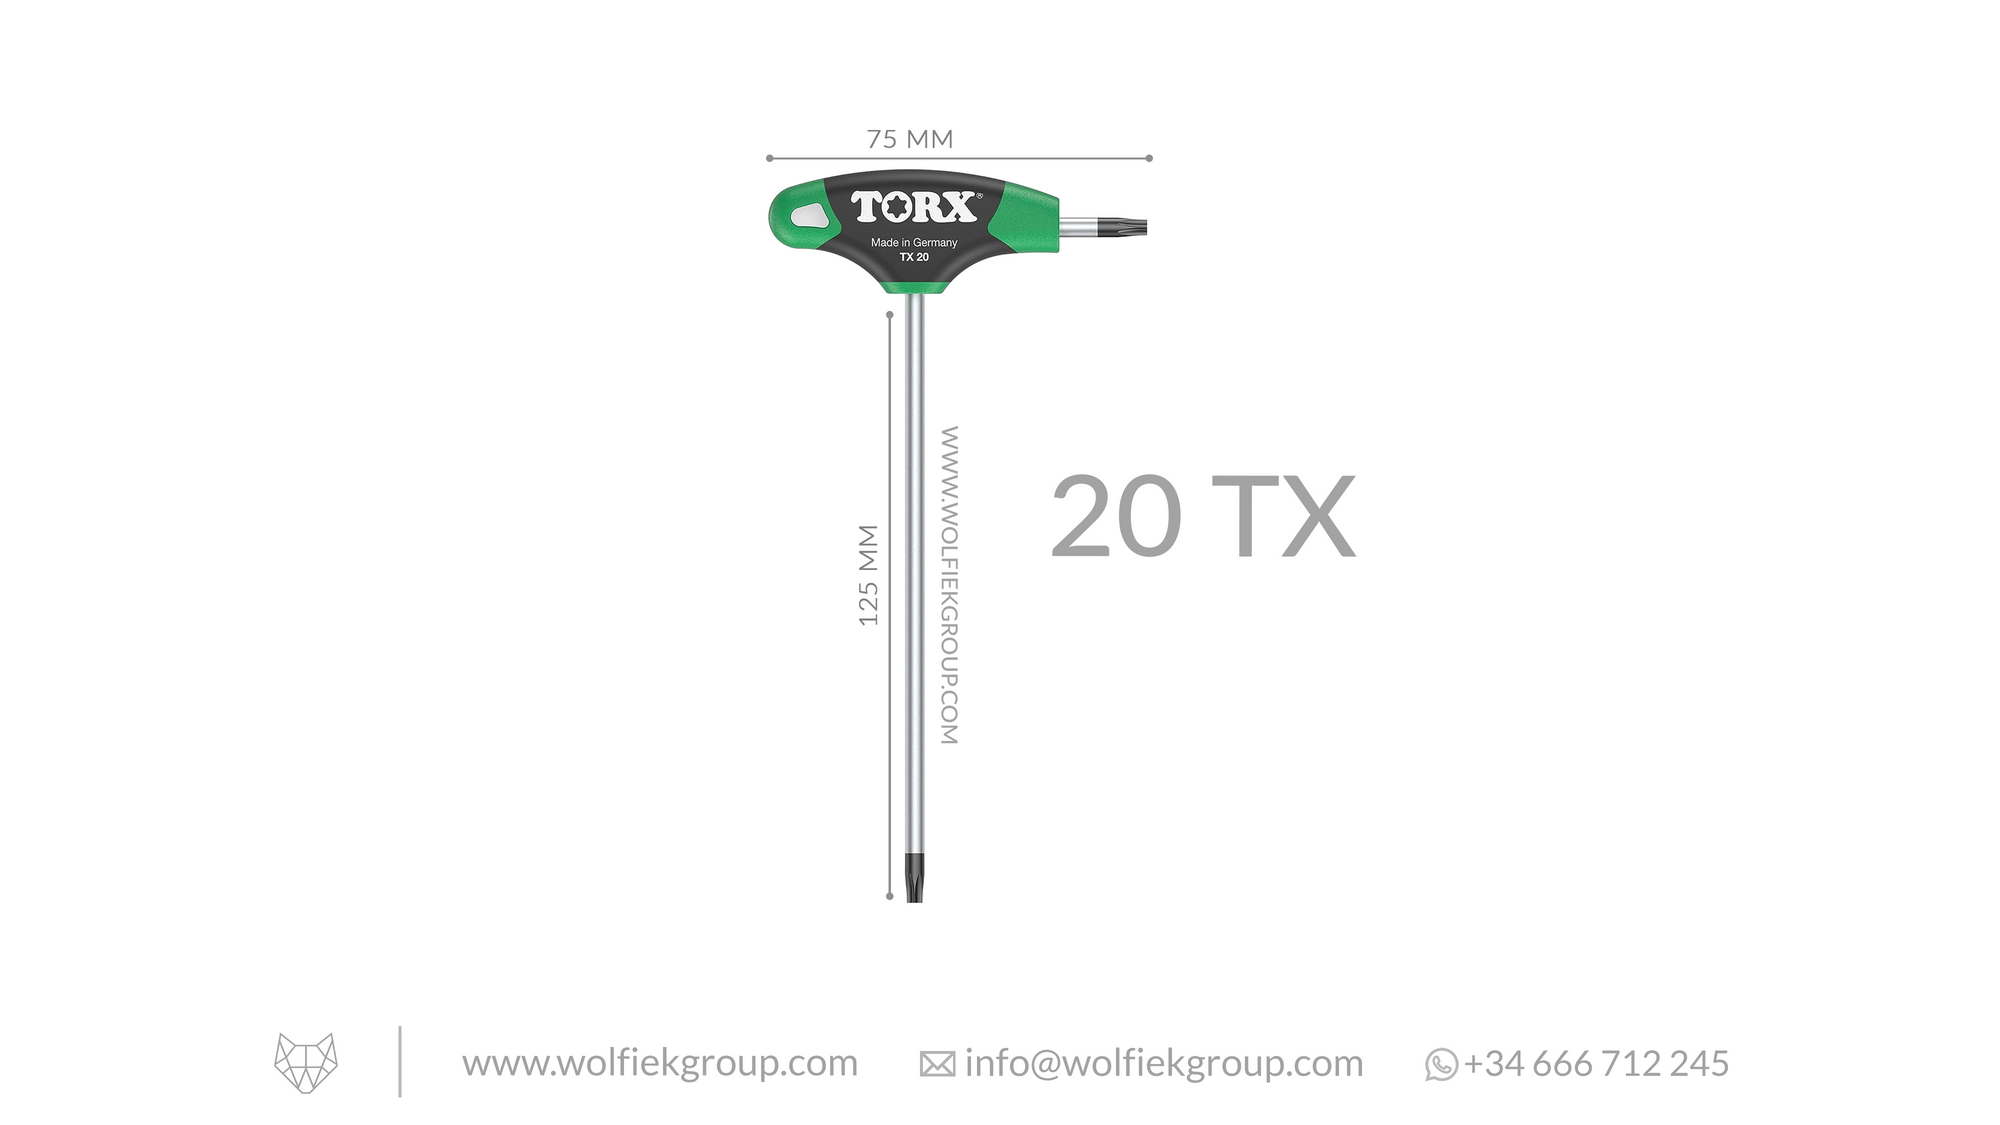 Torx screwdriver